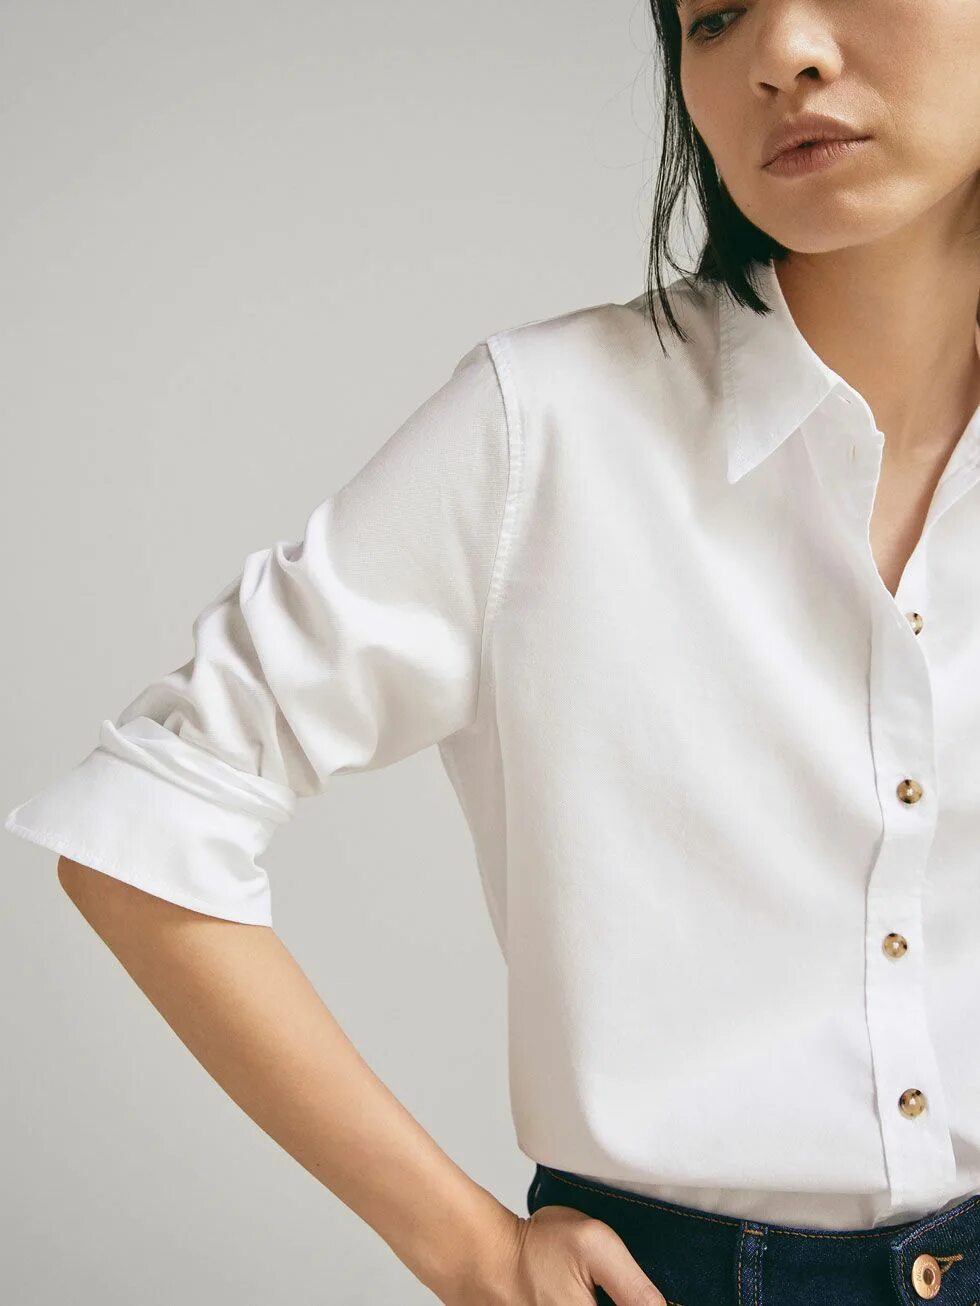 Рубашка белая massimo Dutti. Massimo Dutti рубашка белая женская. Белая рубашка Массимо дутти женская. Белая блузка Массимо дутти.